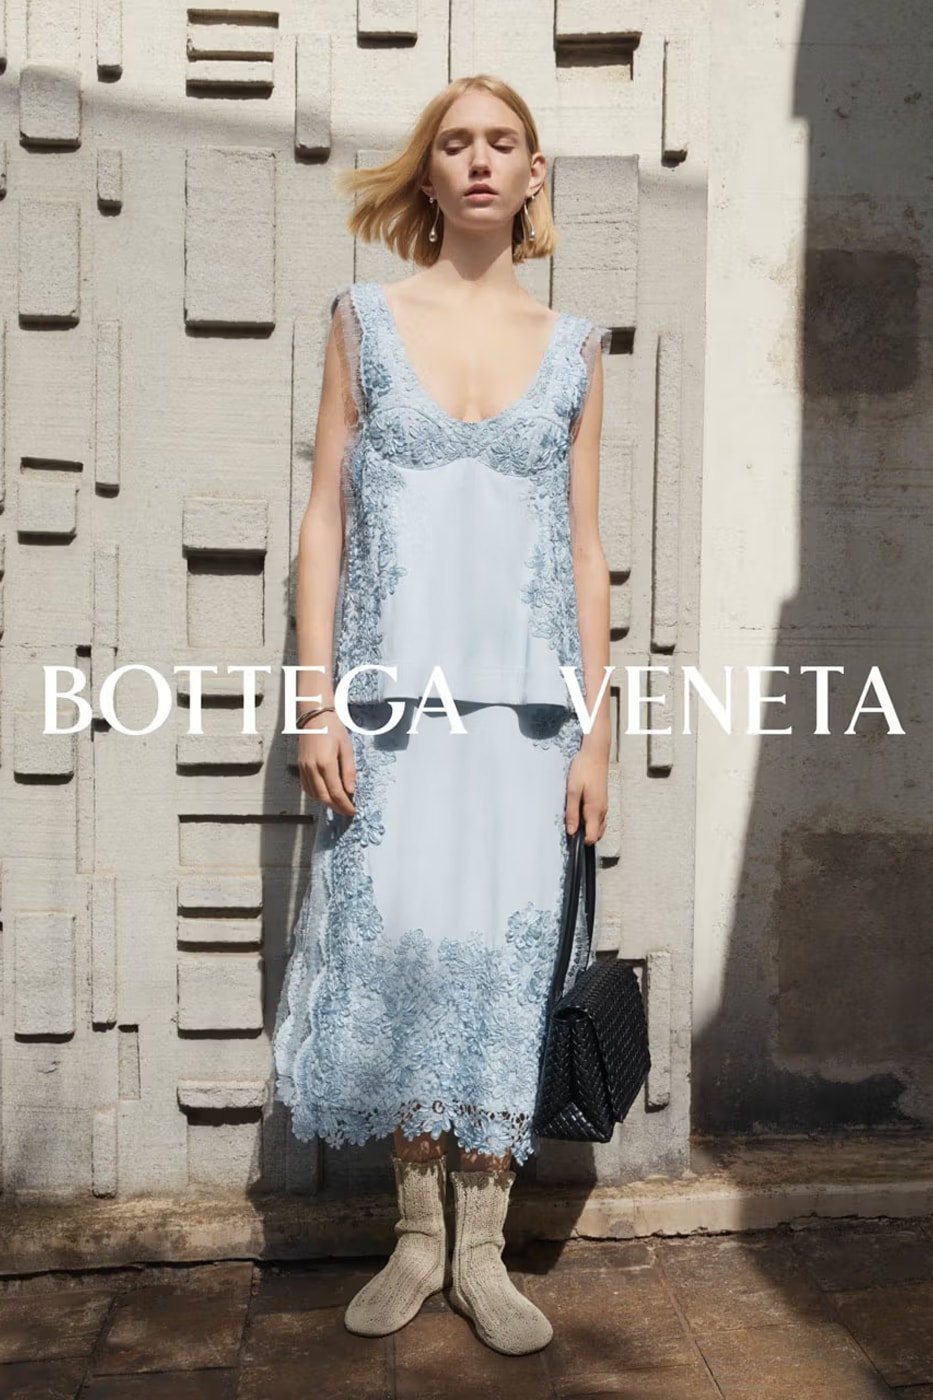 Bottega Veneta Intrecciato Weave - The Cutting Class